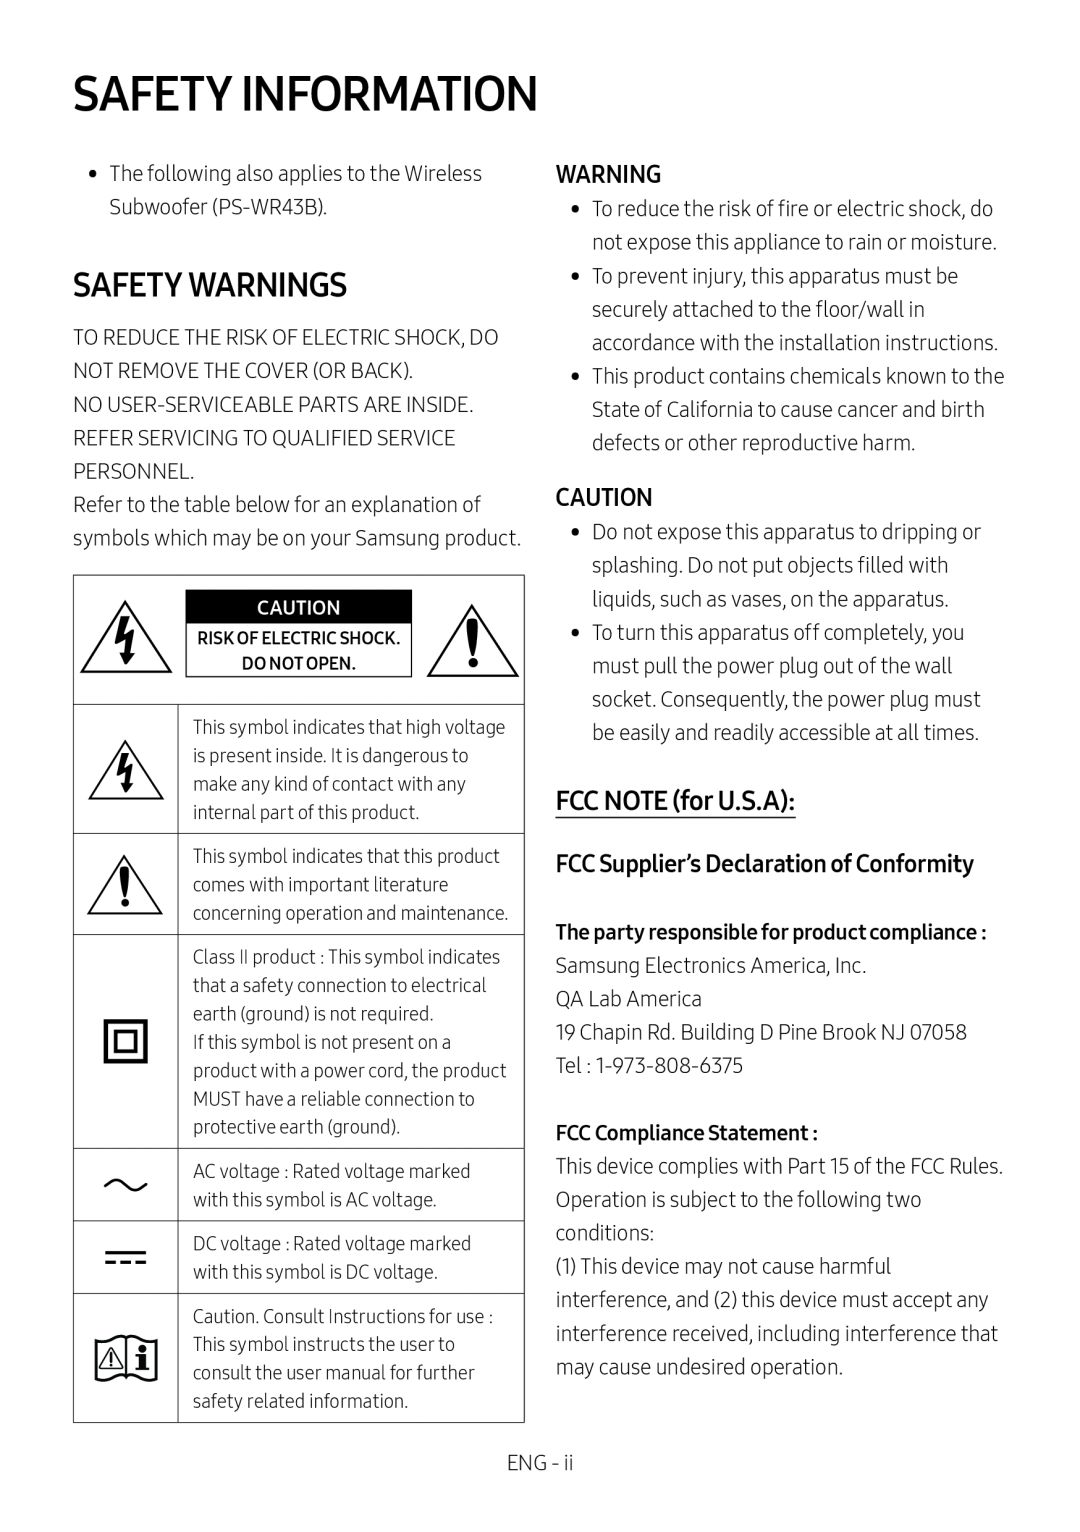 SAFETY WARNINGS Standard HW-R40M